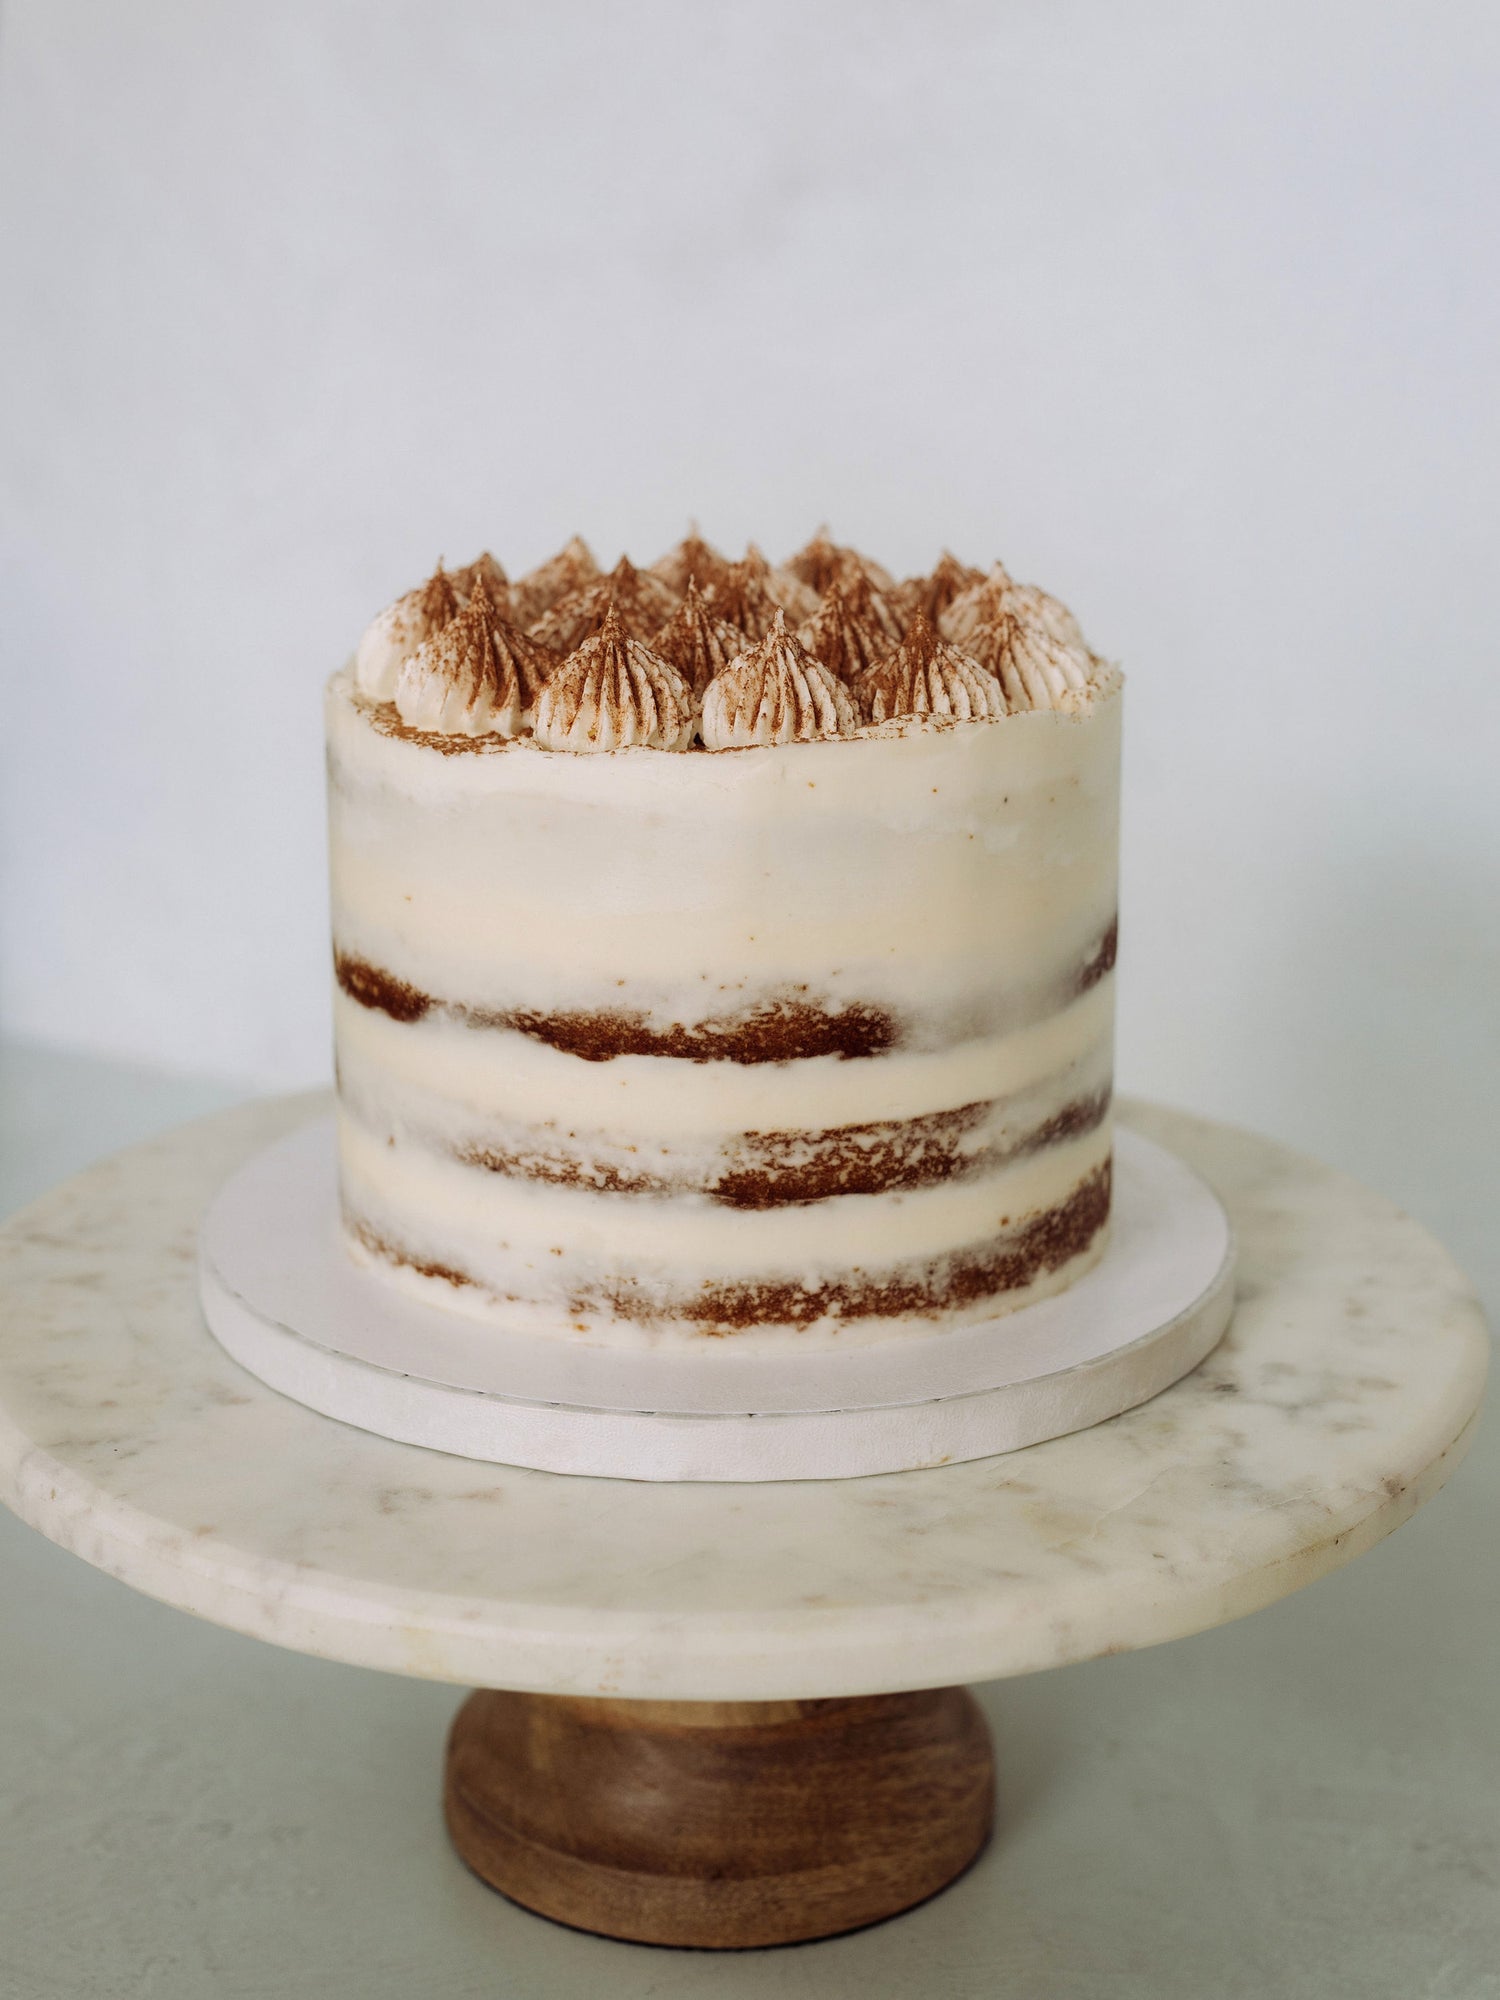 Sugar Blossom Bake Shop - Artisan Cakes, Cupcakes, and Cookies